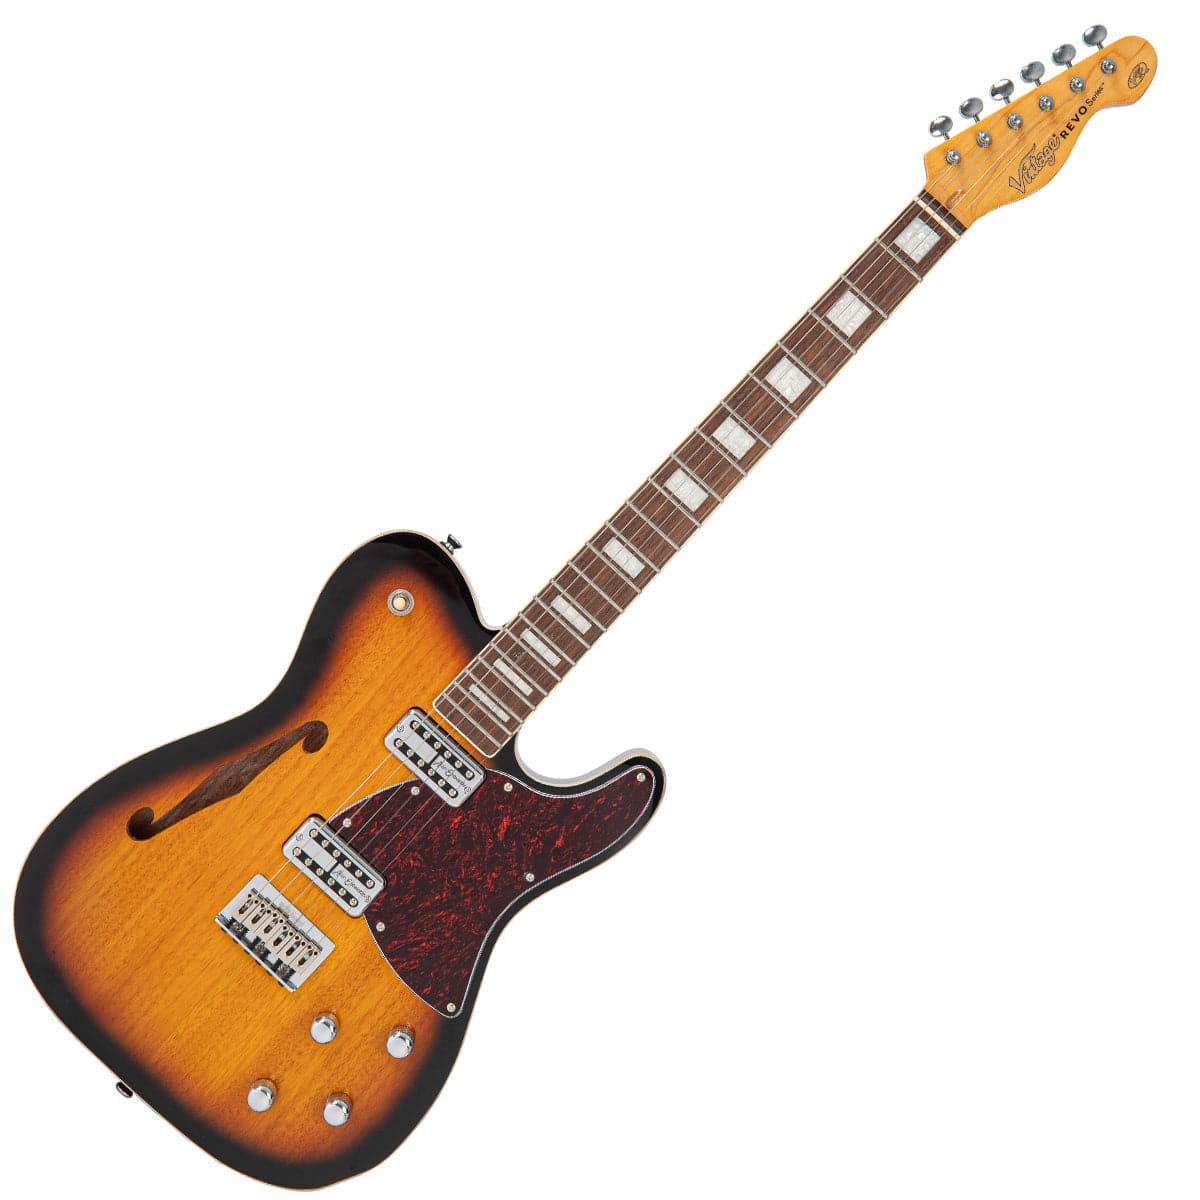 Vintage REVO Series 'Midline' Guitar ~ Two-Tone Sunburst